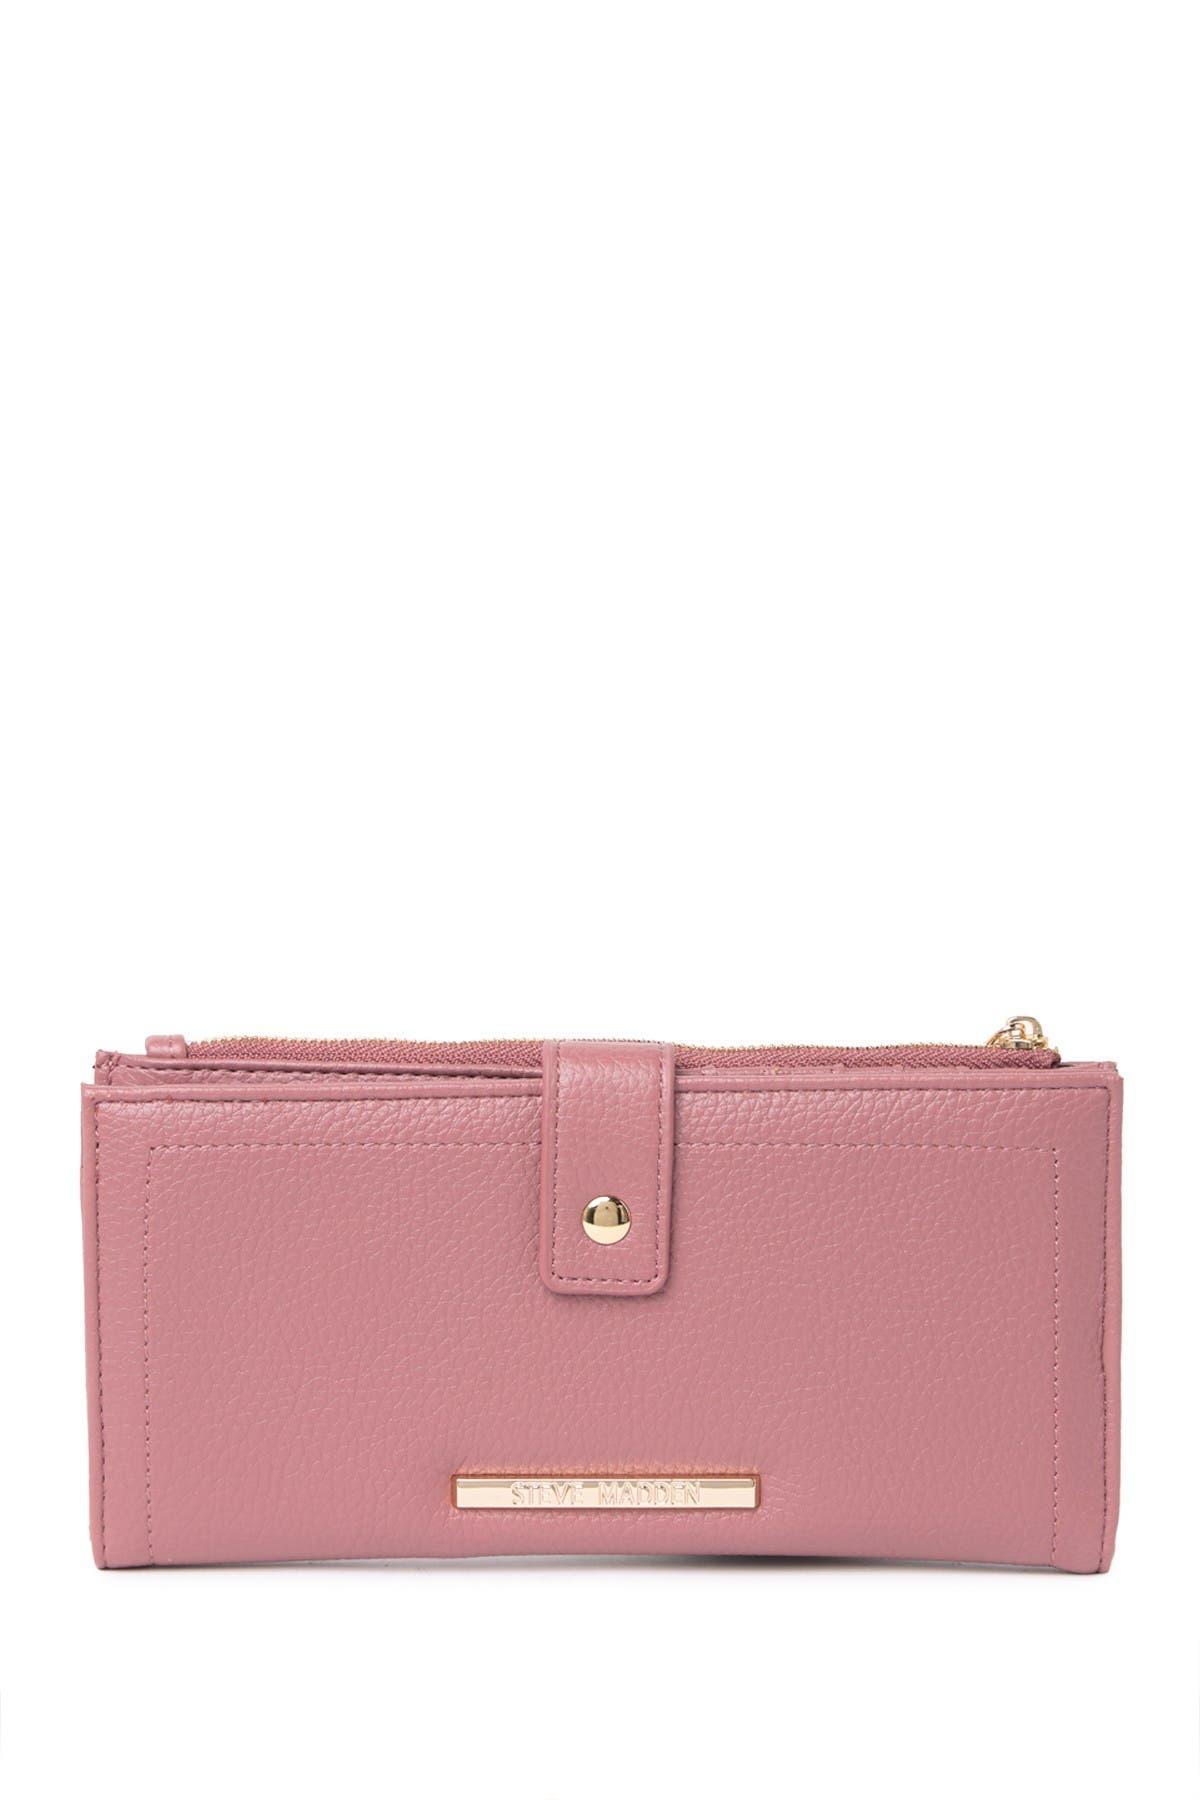 Steve Madden Bi-fold Large Wallet in Pink | Lyst